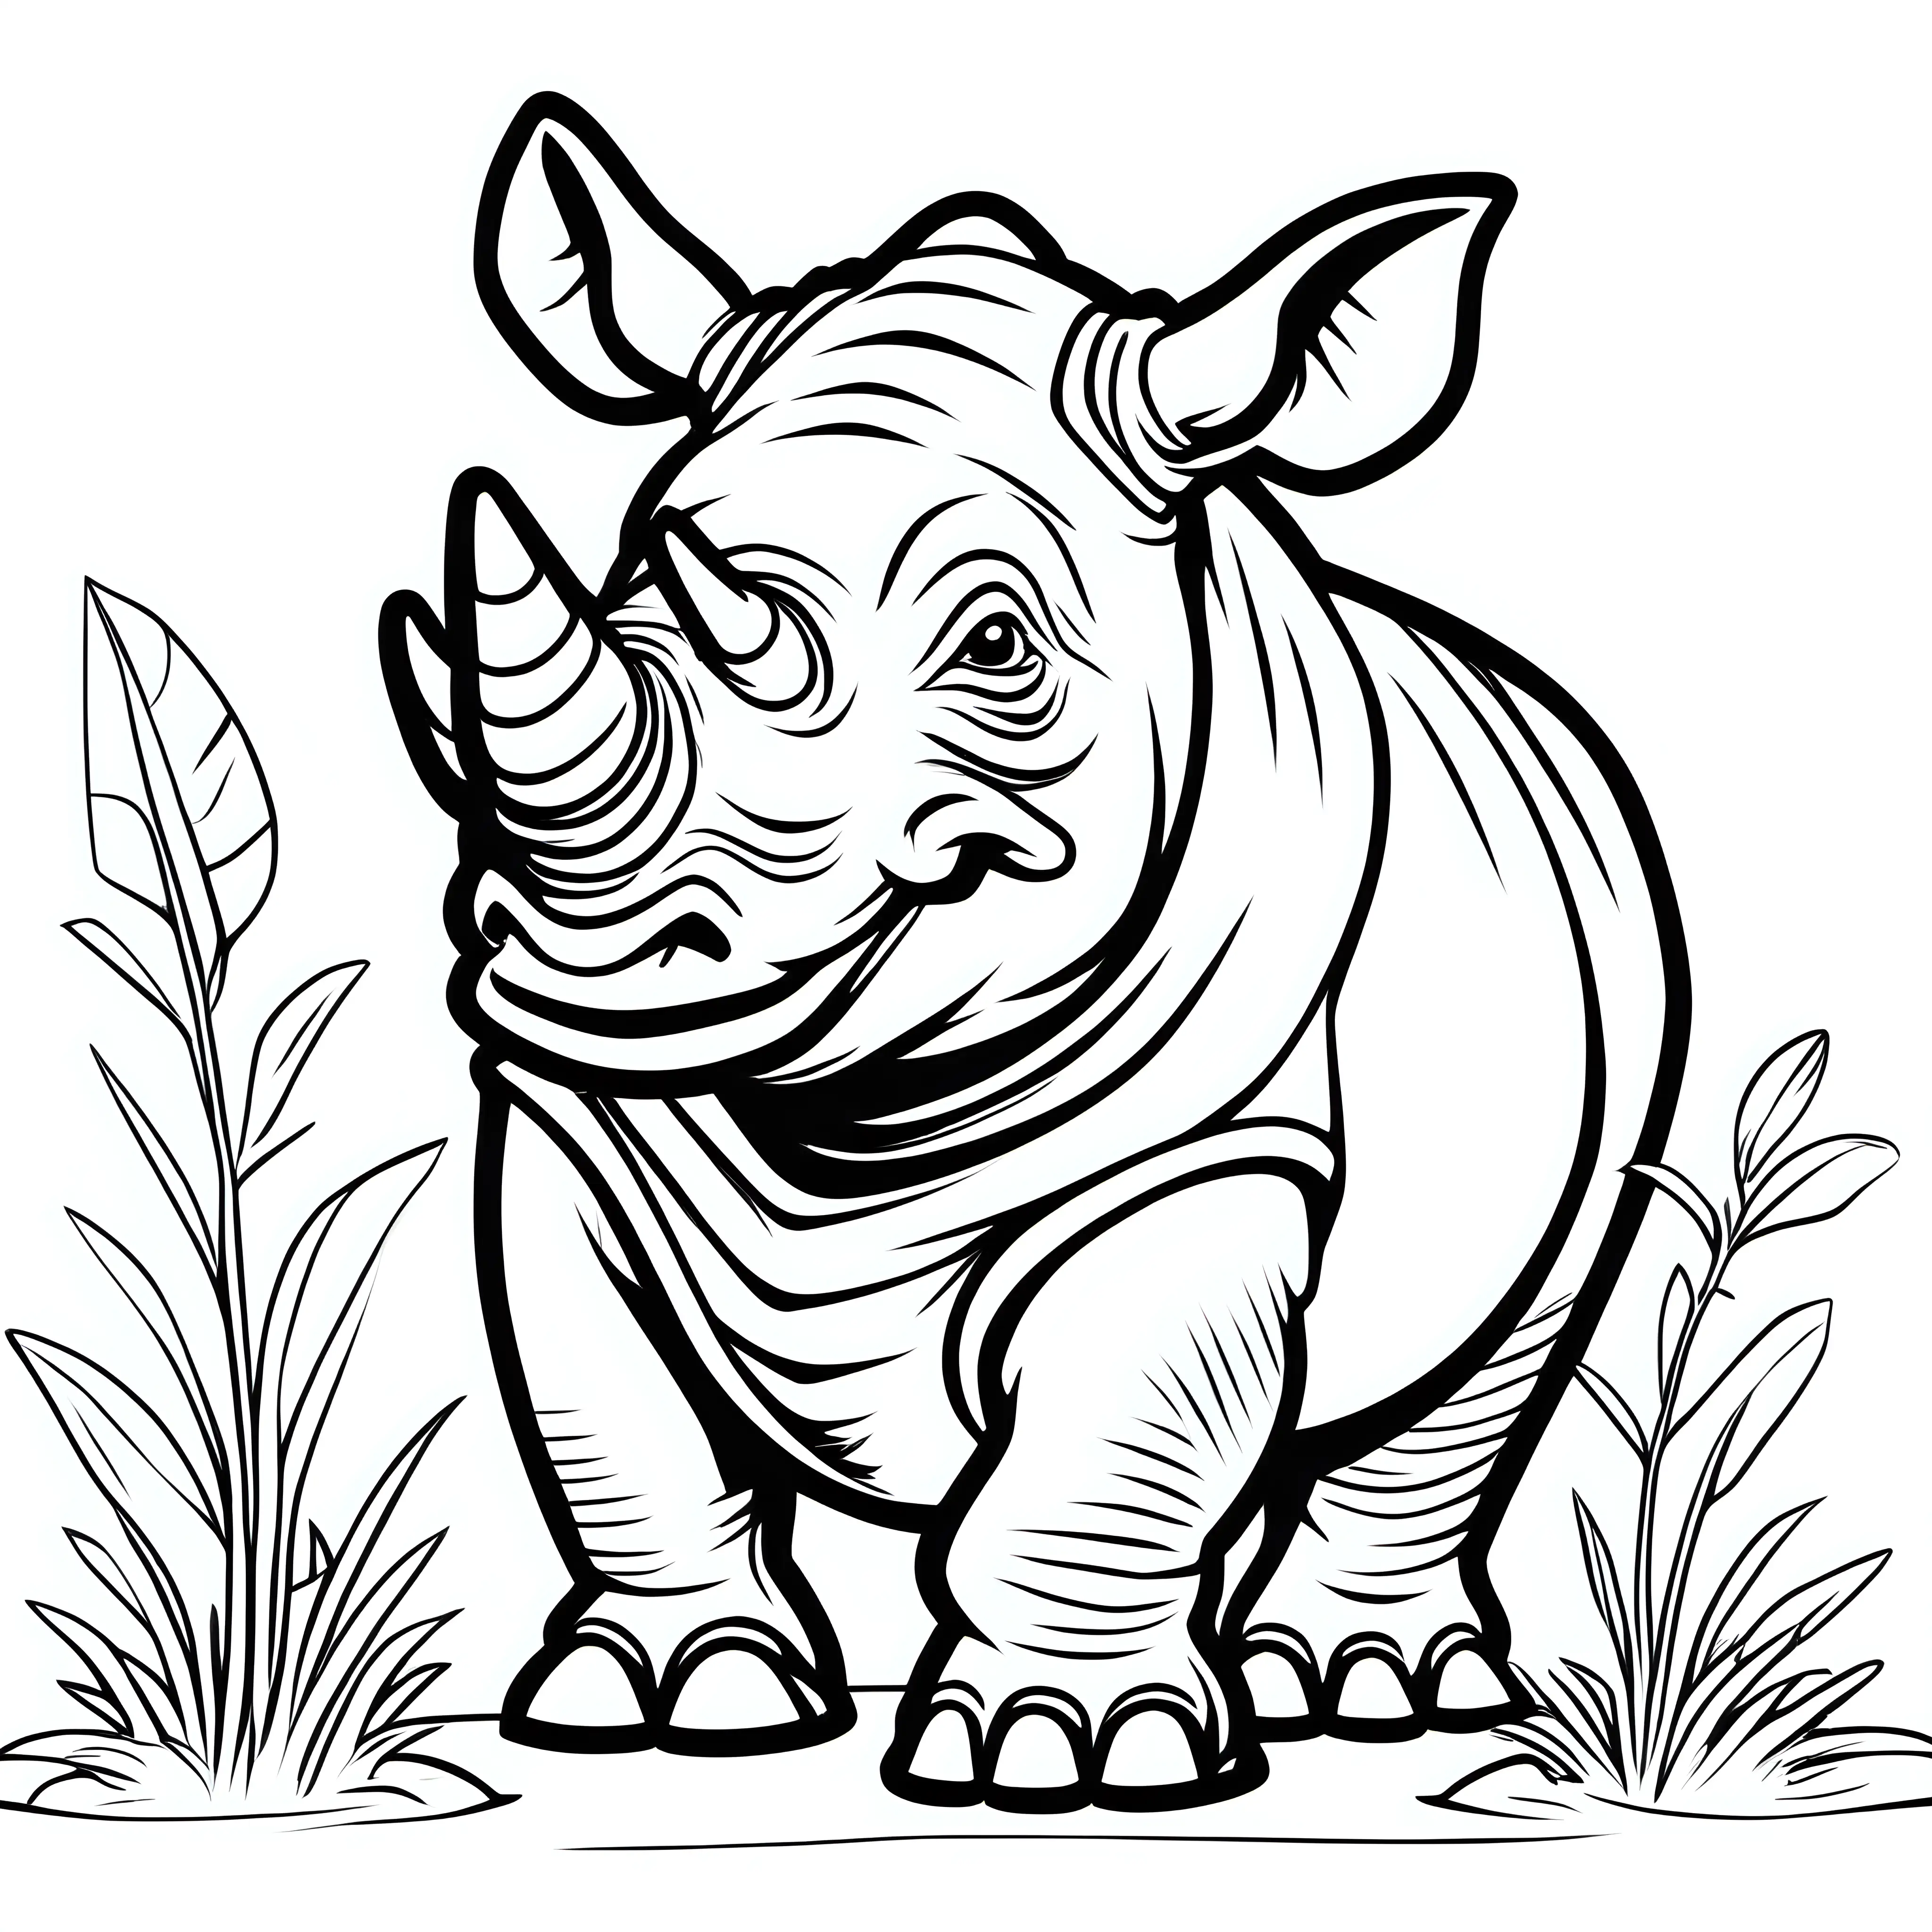 Cartoon grey rhino character Royalty Free Vector Image